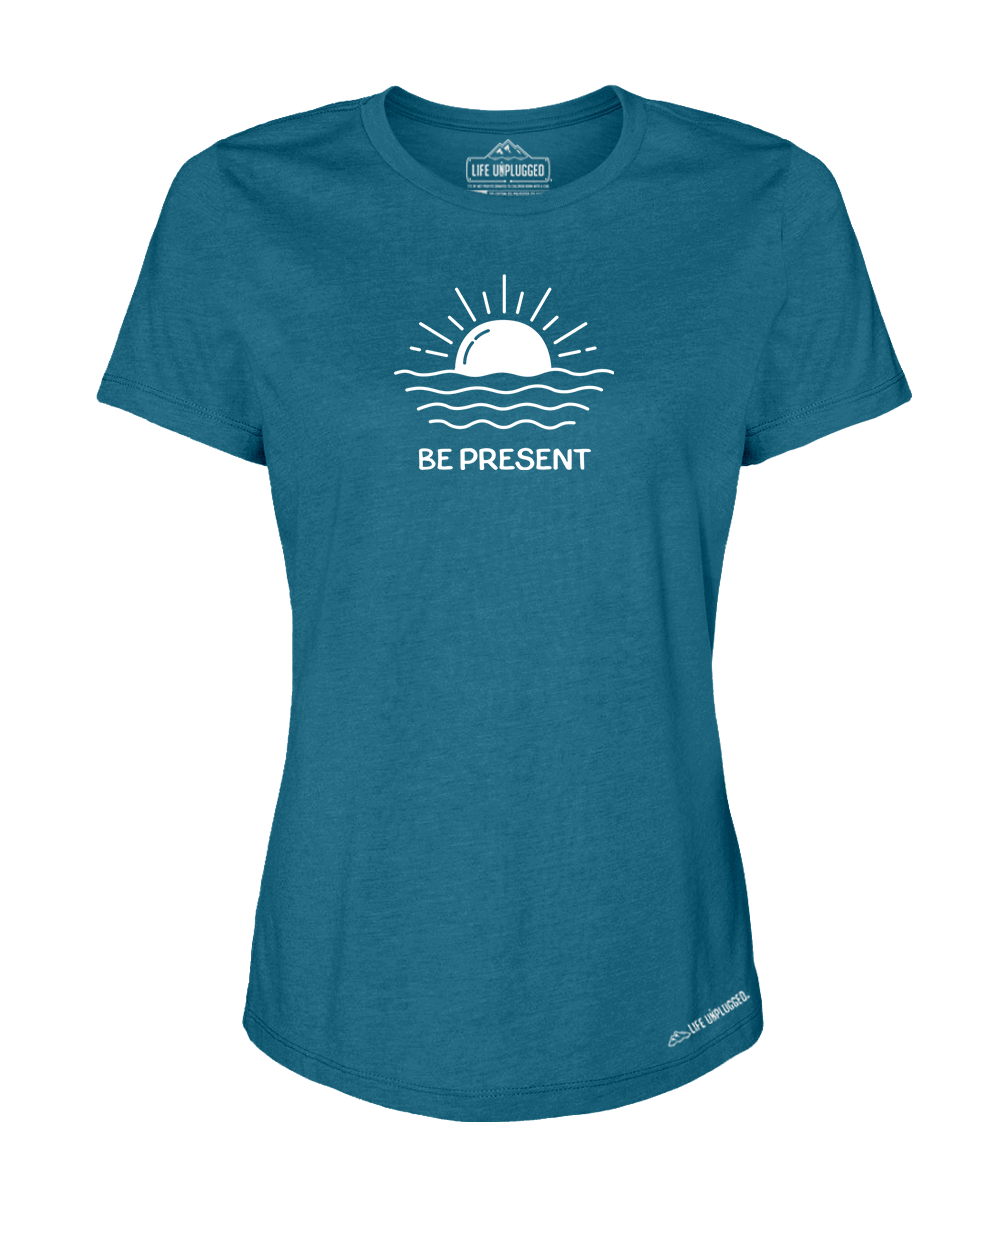 OCEAN SUNSET Premium Women's Relaxed Fit Polyblend T-Shirt - Life Unplugged